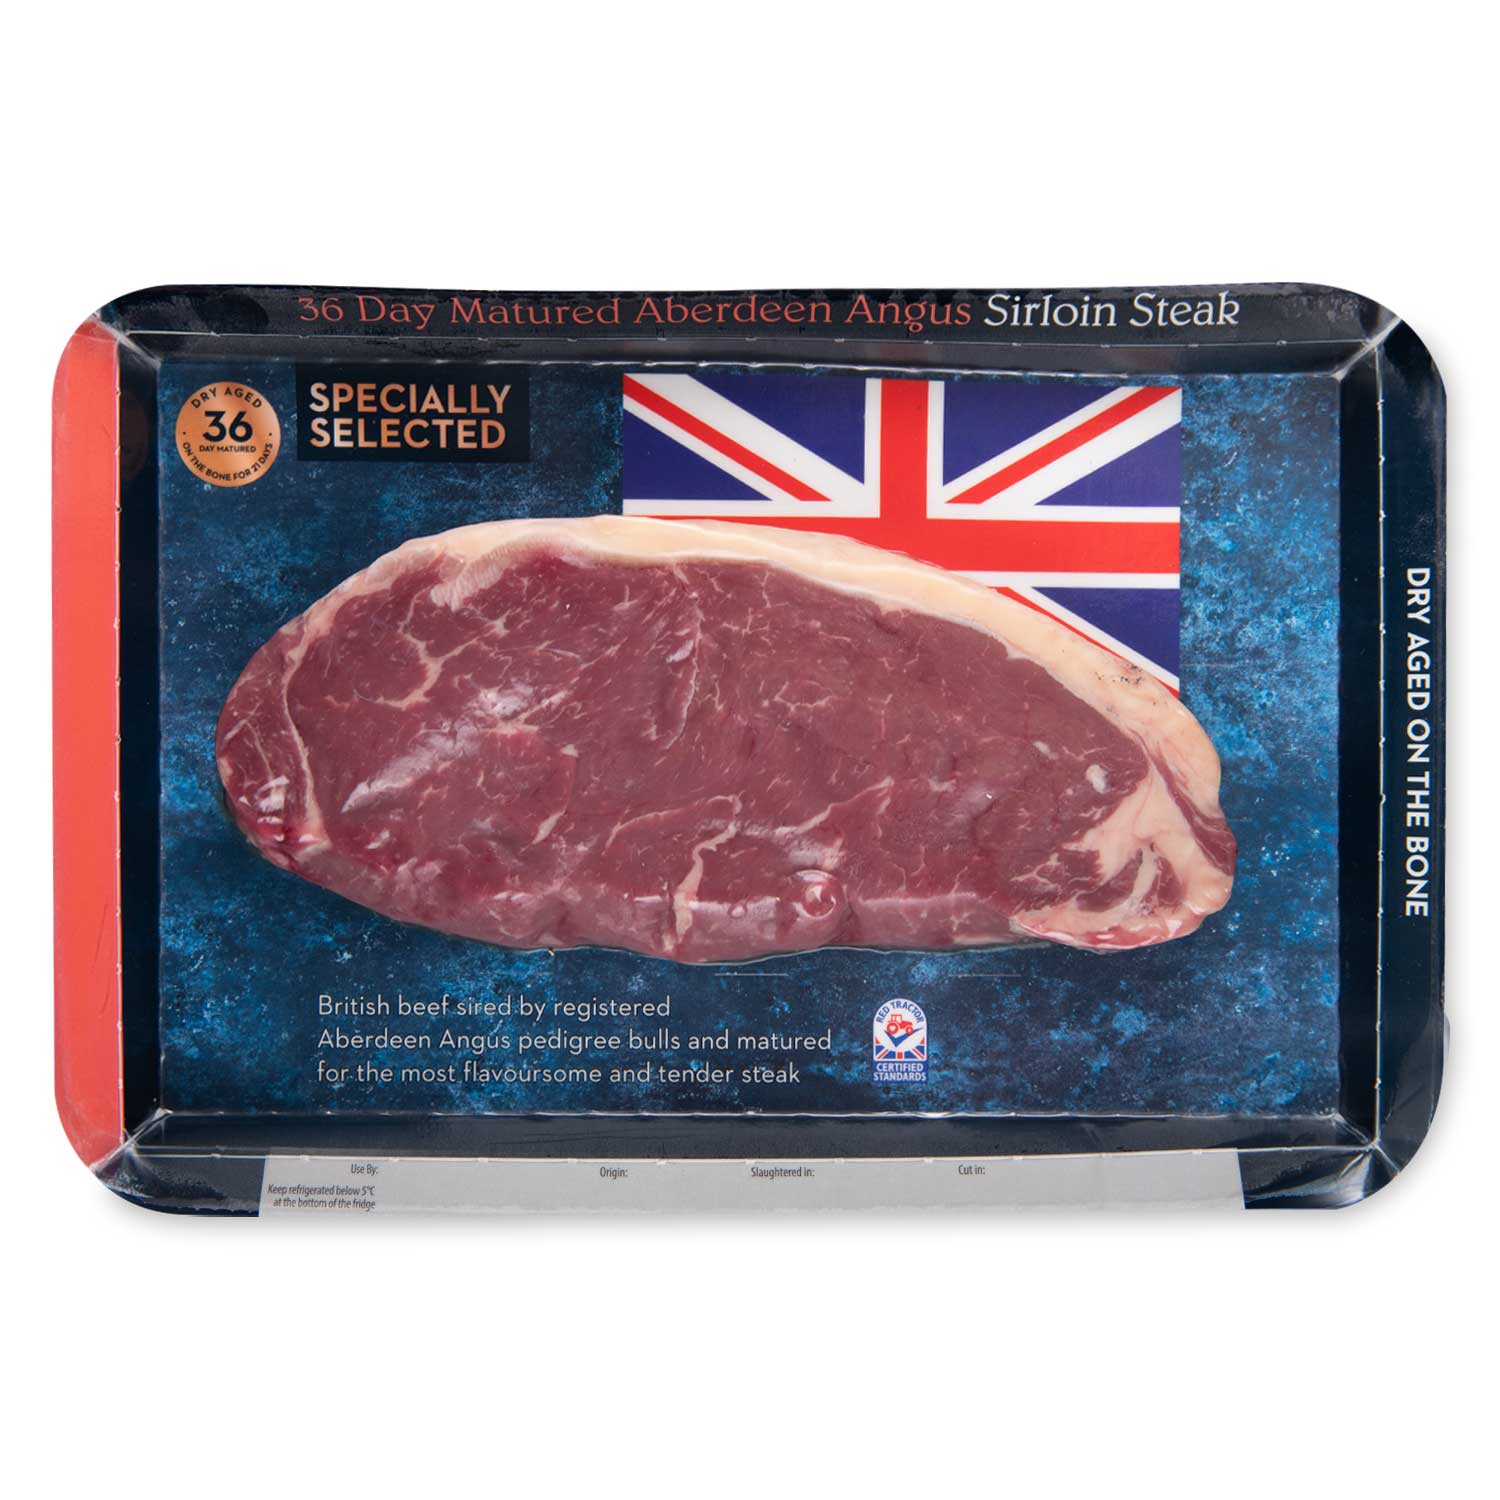 Specially Selected 36 Day Matured Aberdeen Angus Sirloin Steak 227g